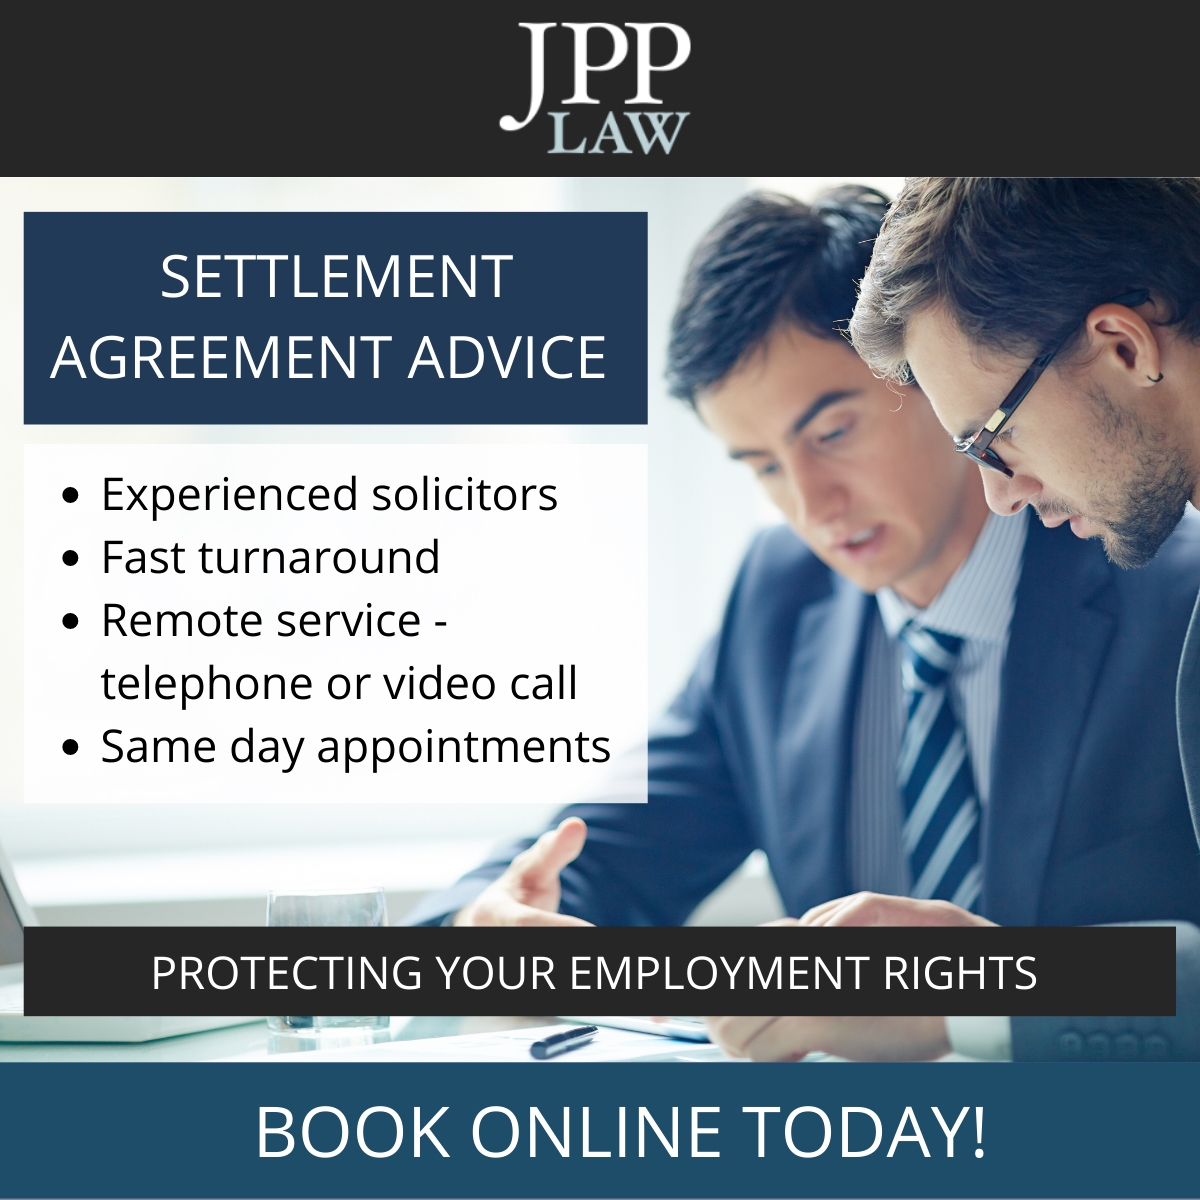 For more information visit bit.ly/43FK2j8 

#employmentlaw #JPPLaw #settlementagreement #redundancy #dismissal #employmentdispute